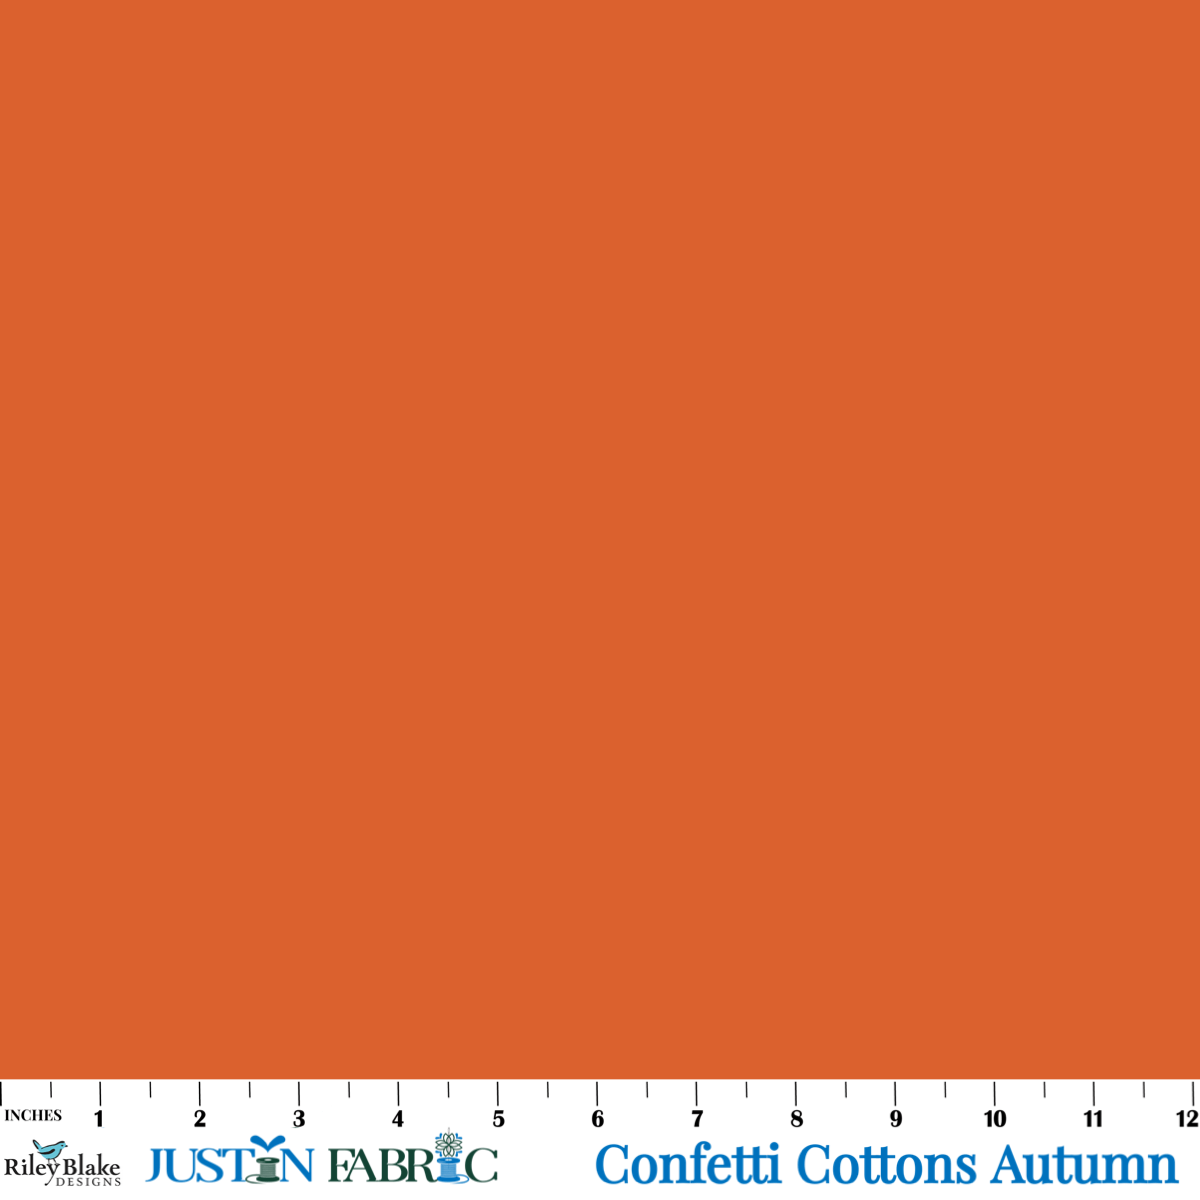 Confetti Cottons Solid Autumn Cotton Yardage | Riley Blake Designs soft premium cotton fabric in solid autumn orange